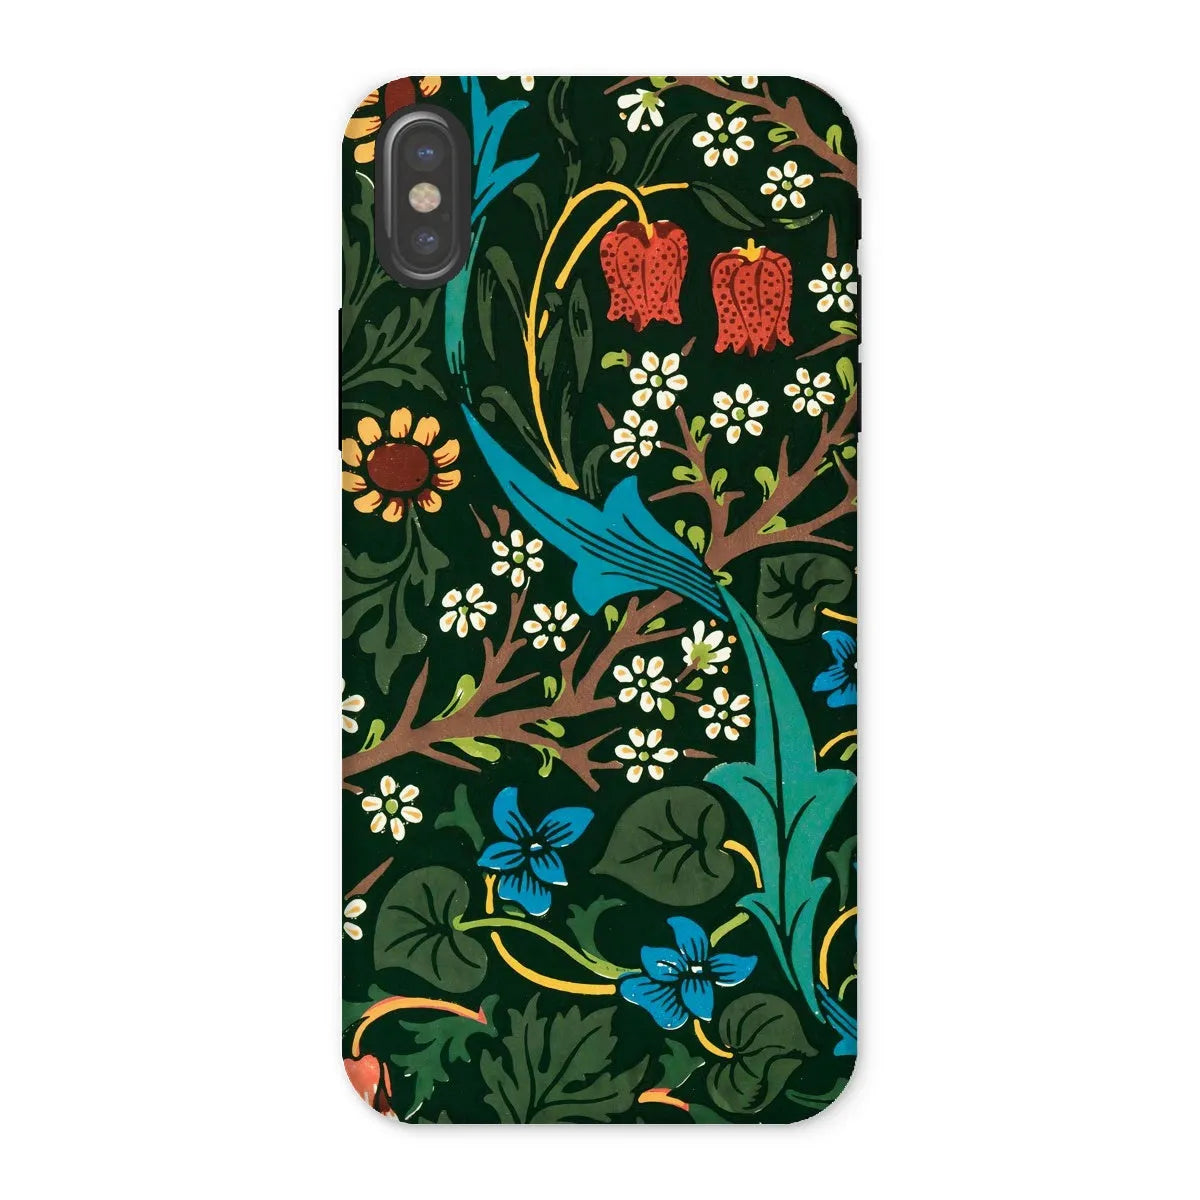 Blackthorn Hawthorn - Floral Phone Case - William Morris - Iphone x / Matte - Mobile Phone Cases - Aesthetic Art